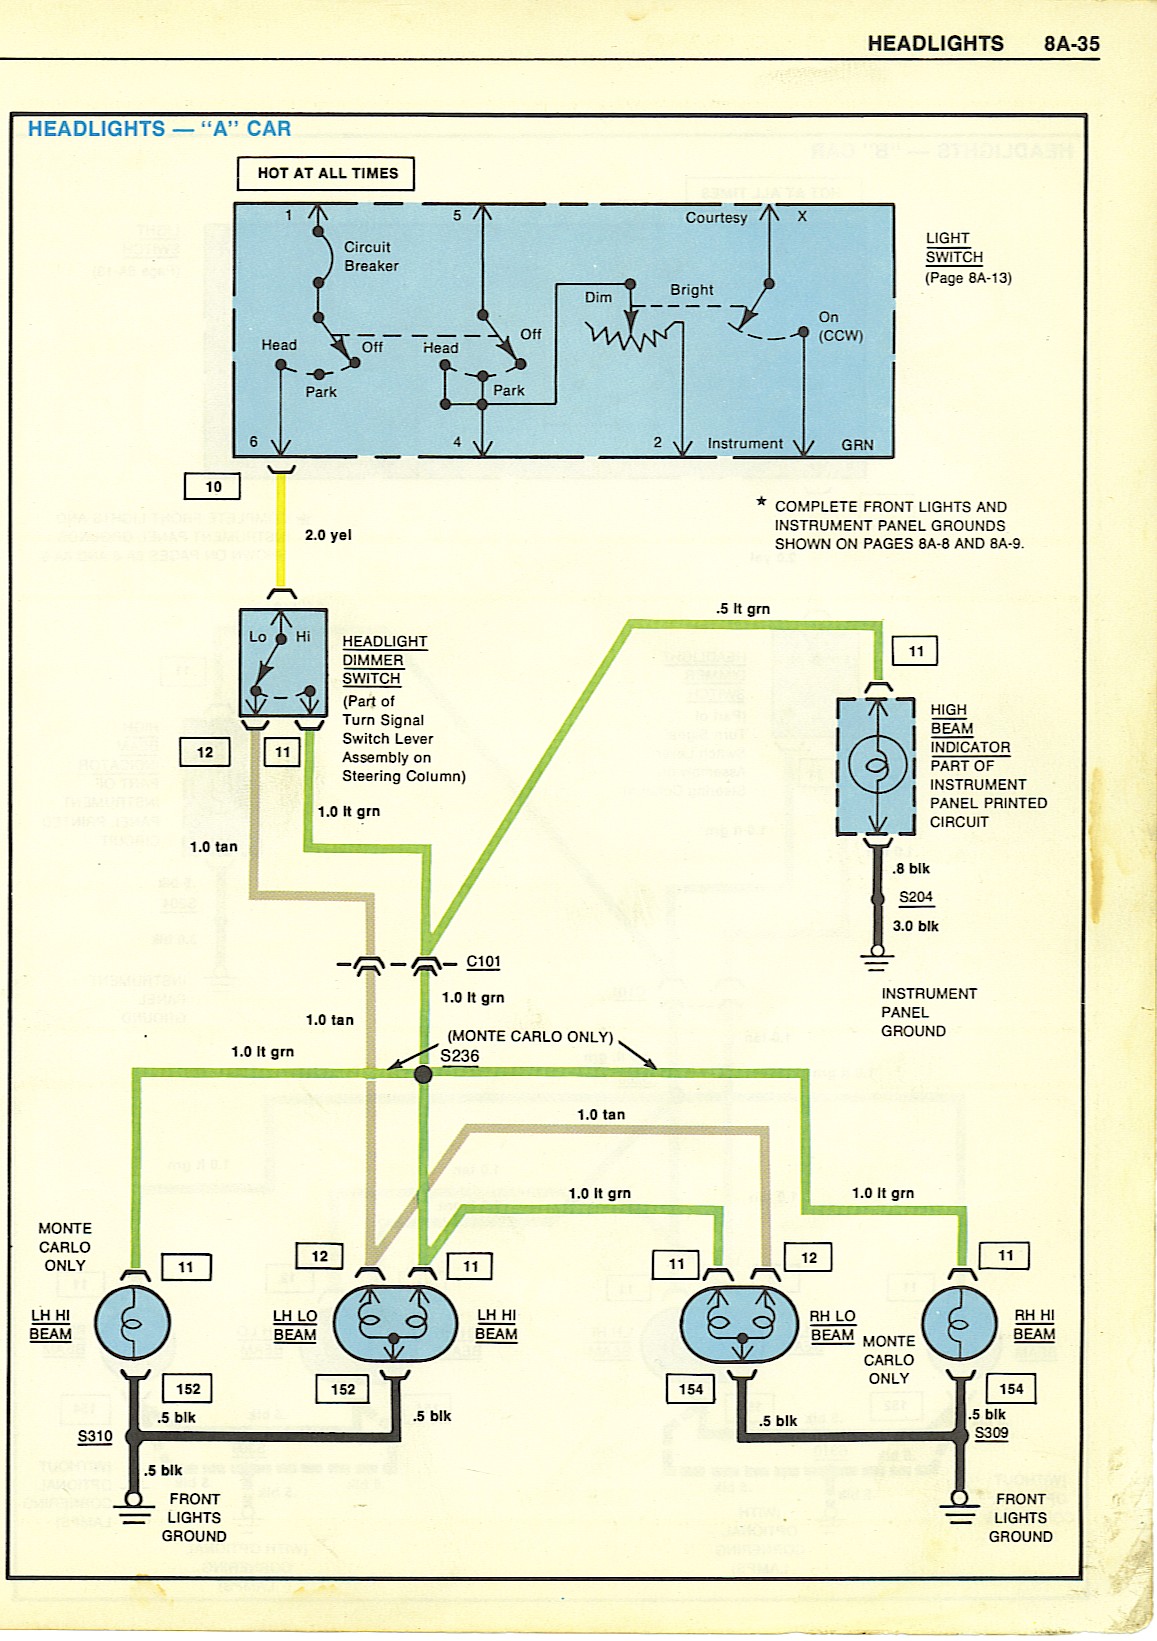 1986 Dodge Headlight Switch Wiring Diagram from cdn-0.gbodyforum.com